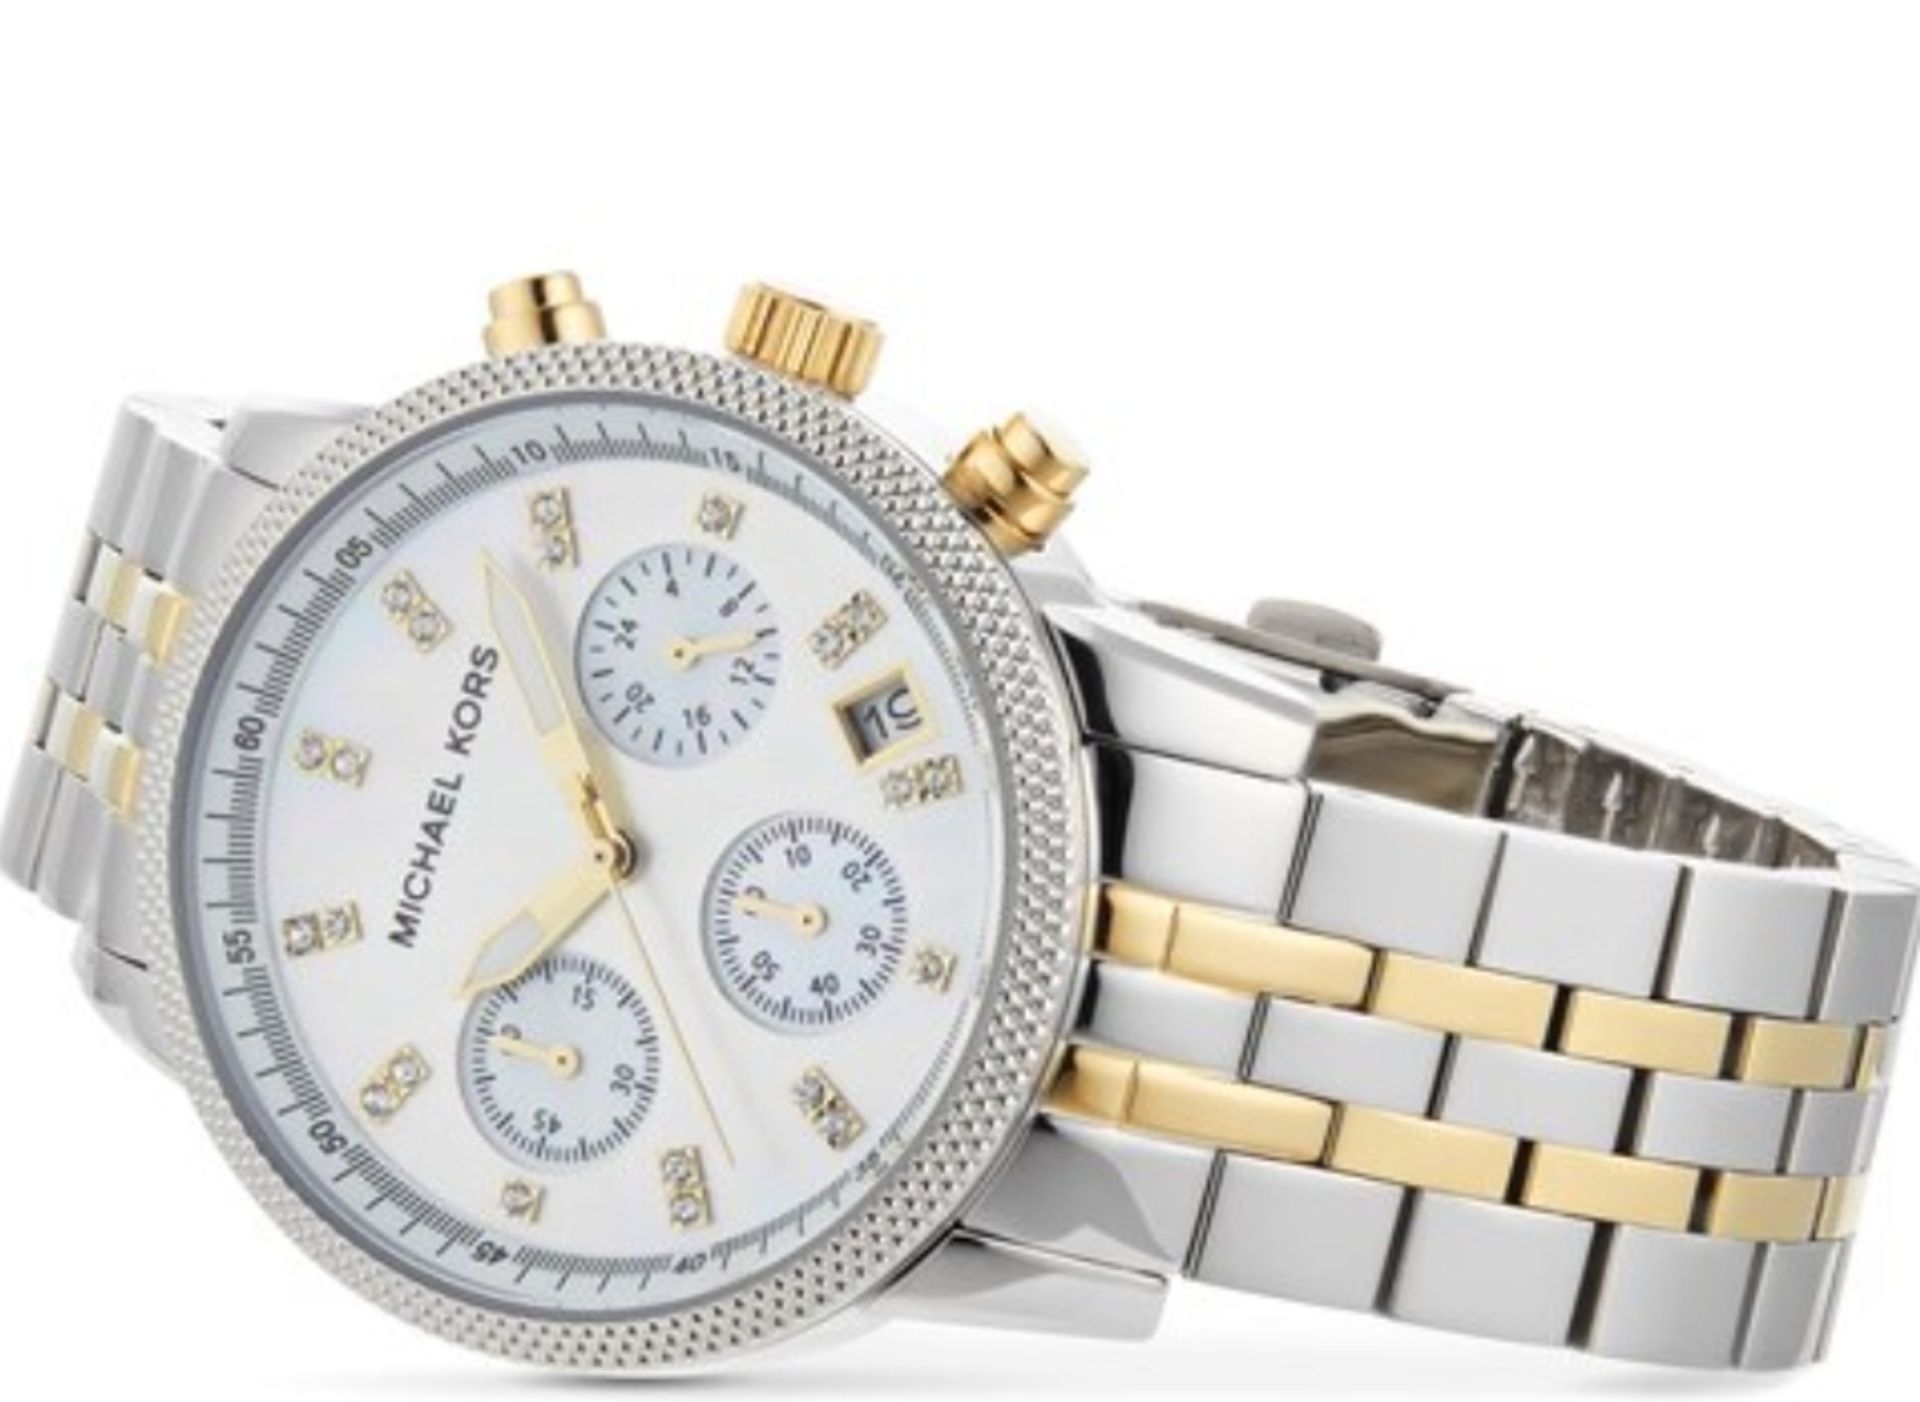 Michael Kors MK5057 Ladies Ritz Watch - Image 7 of 8